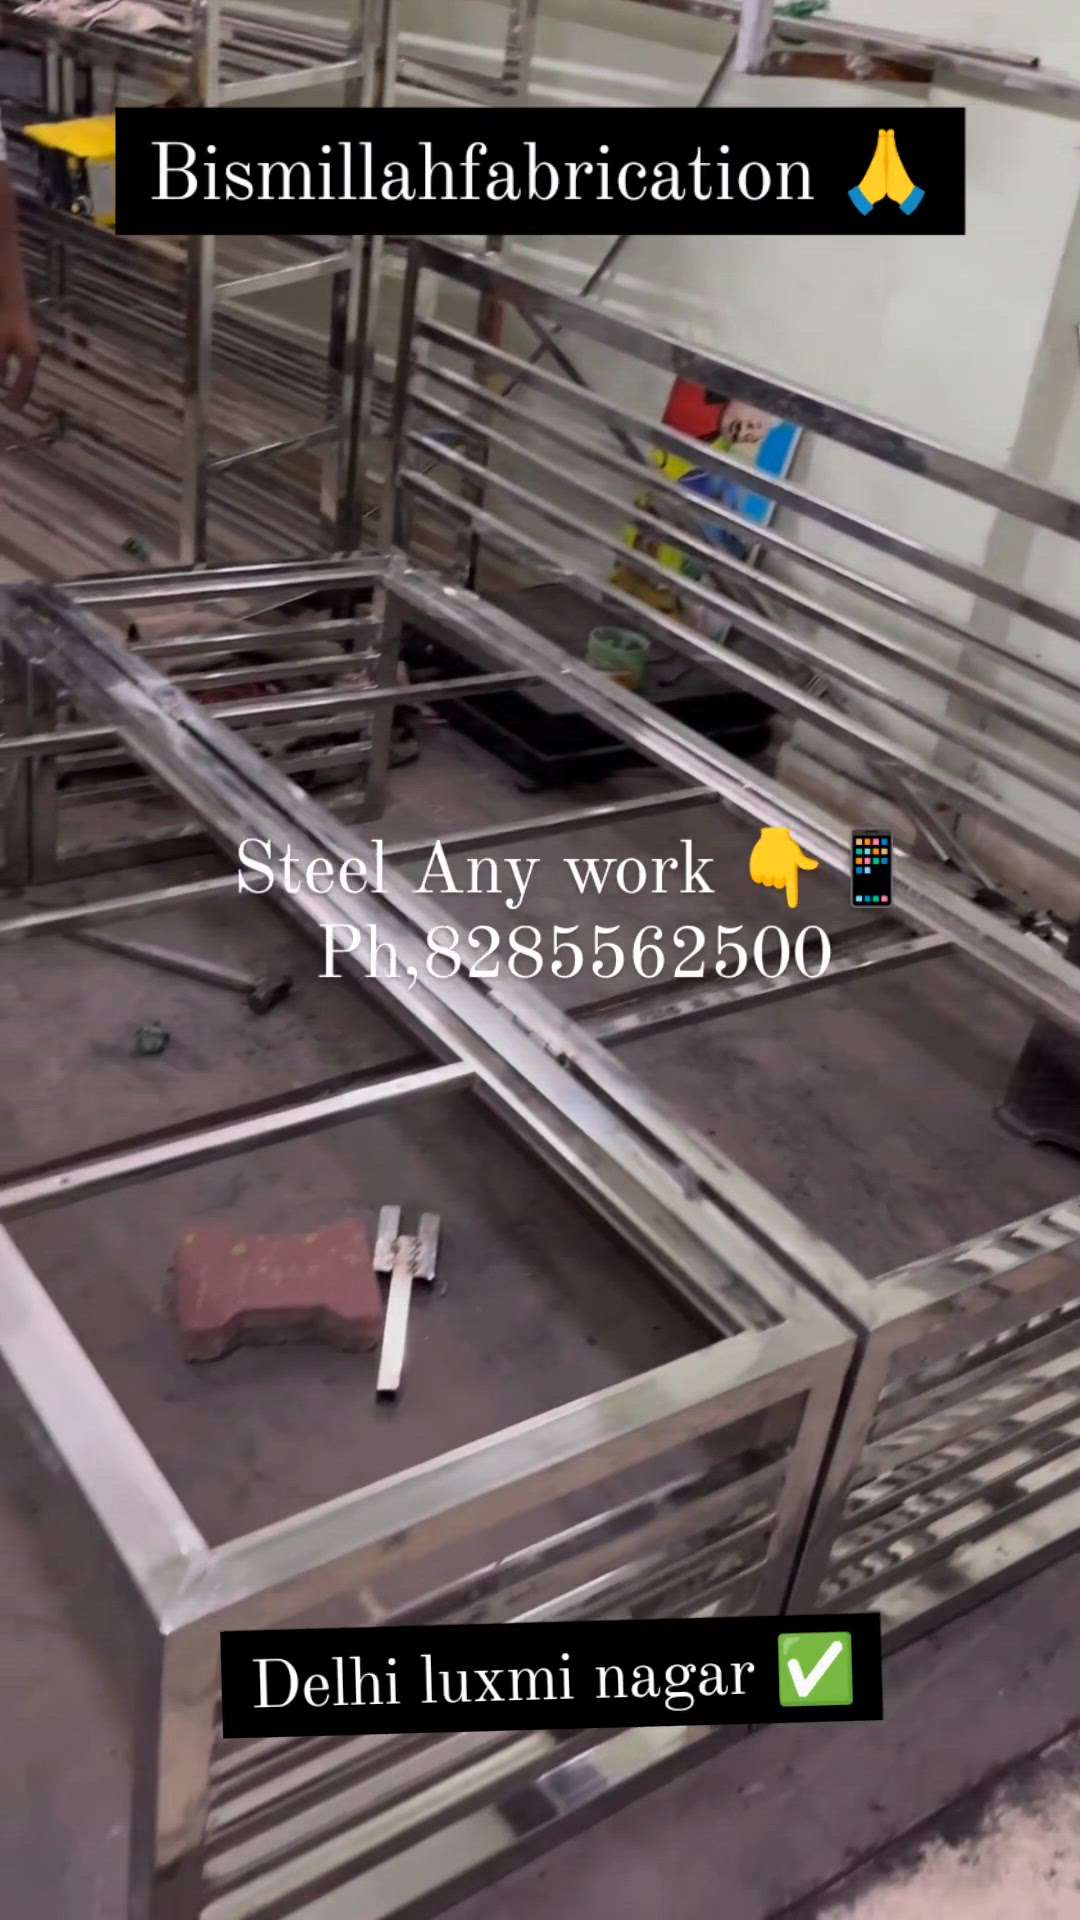 ese kam ke liye sampark kare 👇📞👉
Bismillahfabrication welding work






 #kolohindi  #koloapp  #koloviral  #kolopost  #TraditionalHouse  #steelwork  #Steeldoor  #trendingdesign